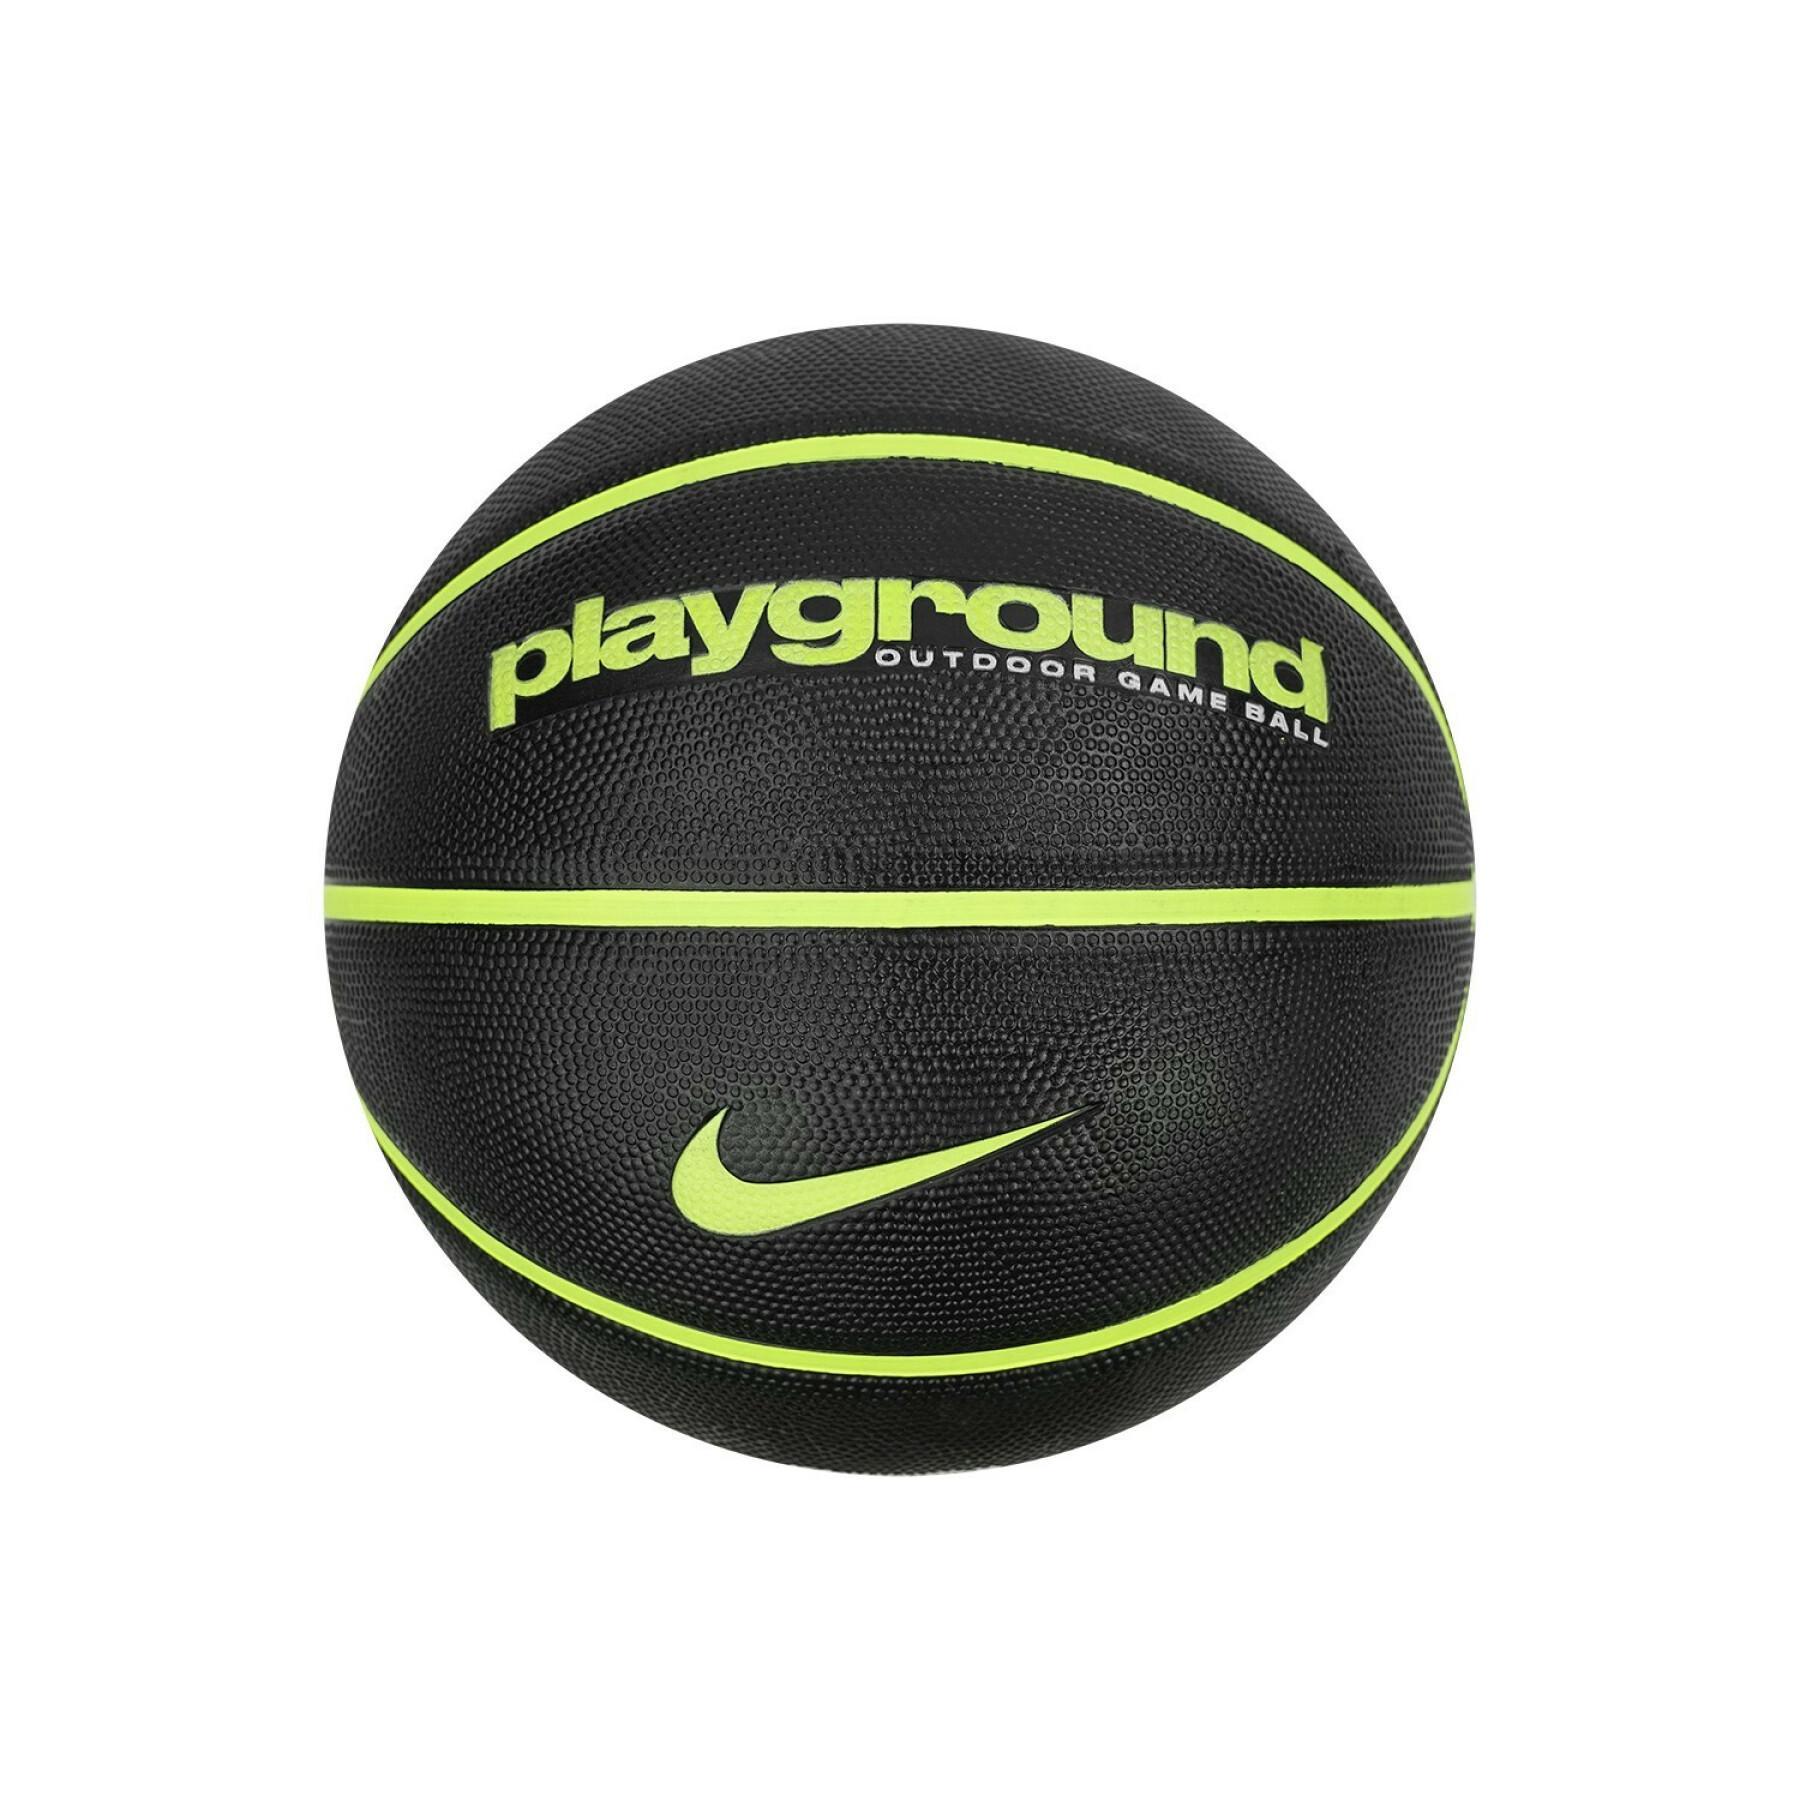 Basketboll Nike Everyday Playground 8P Deflated